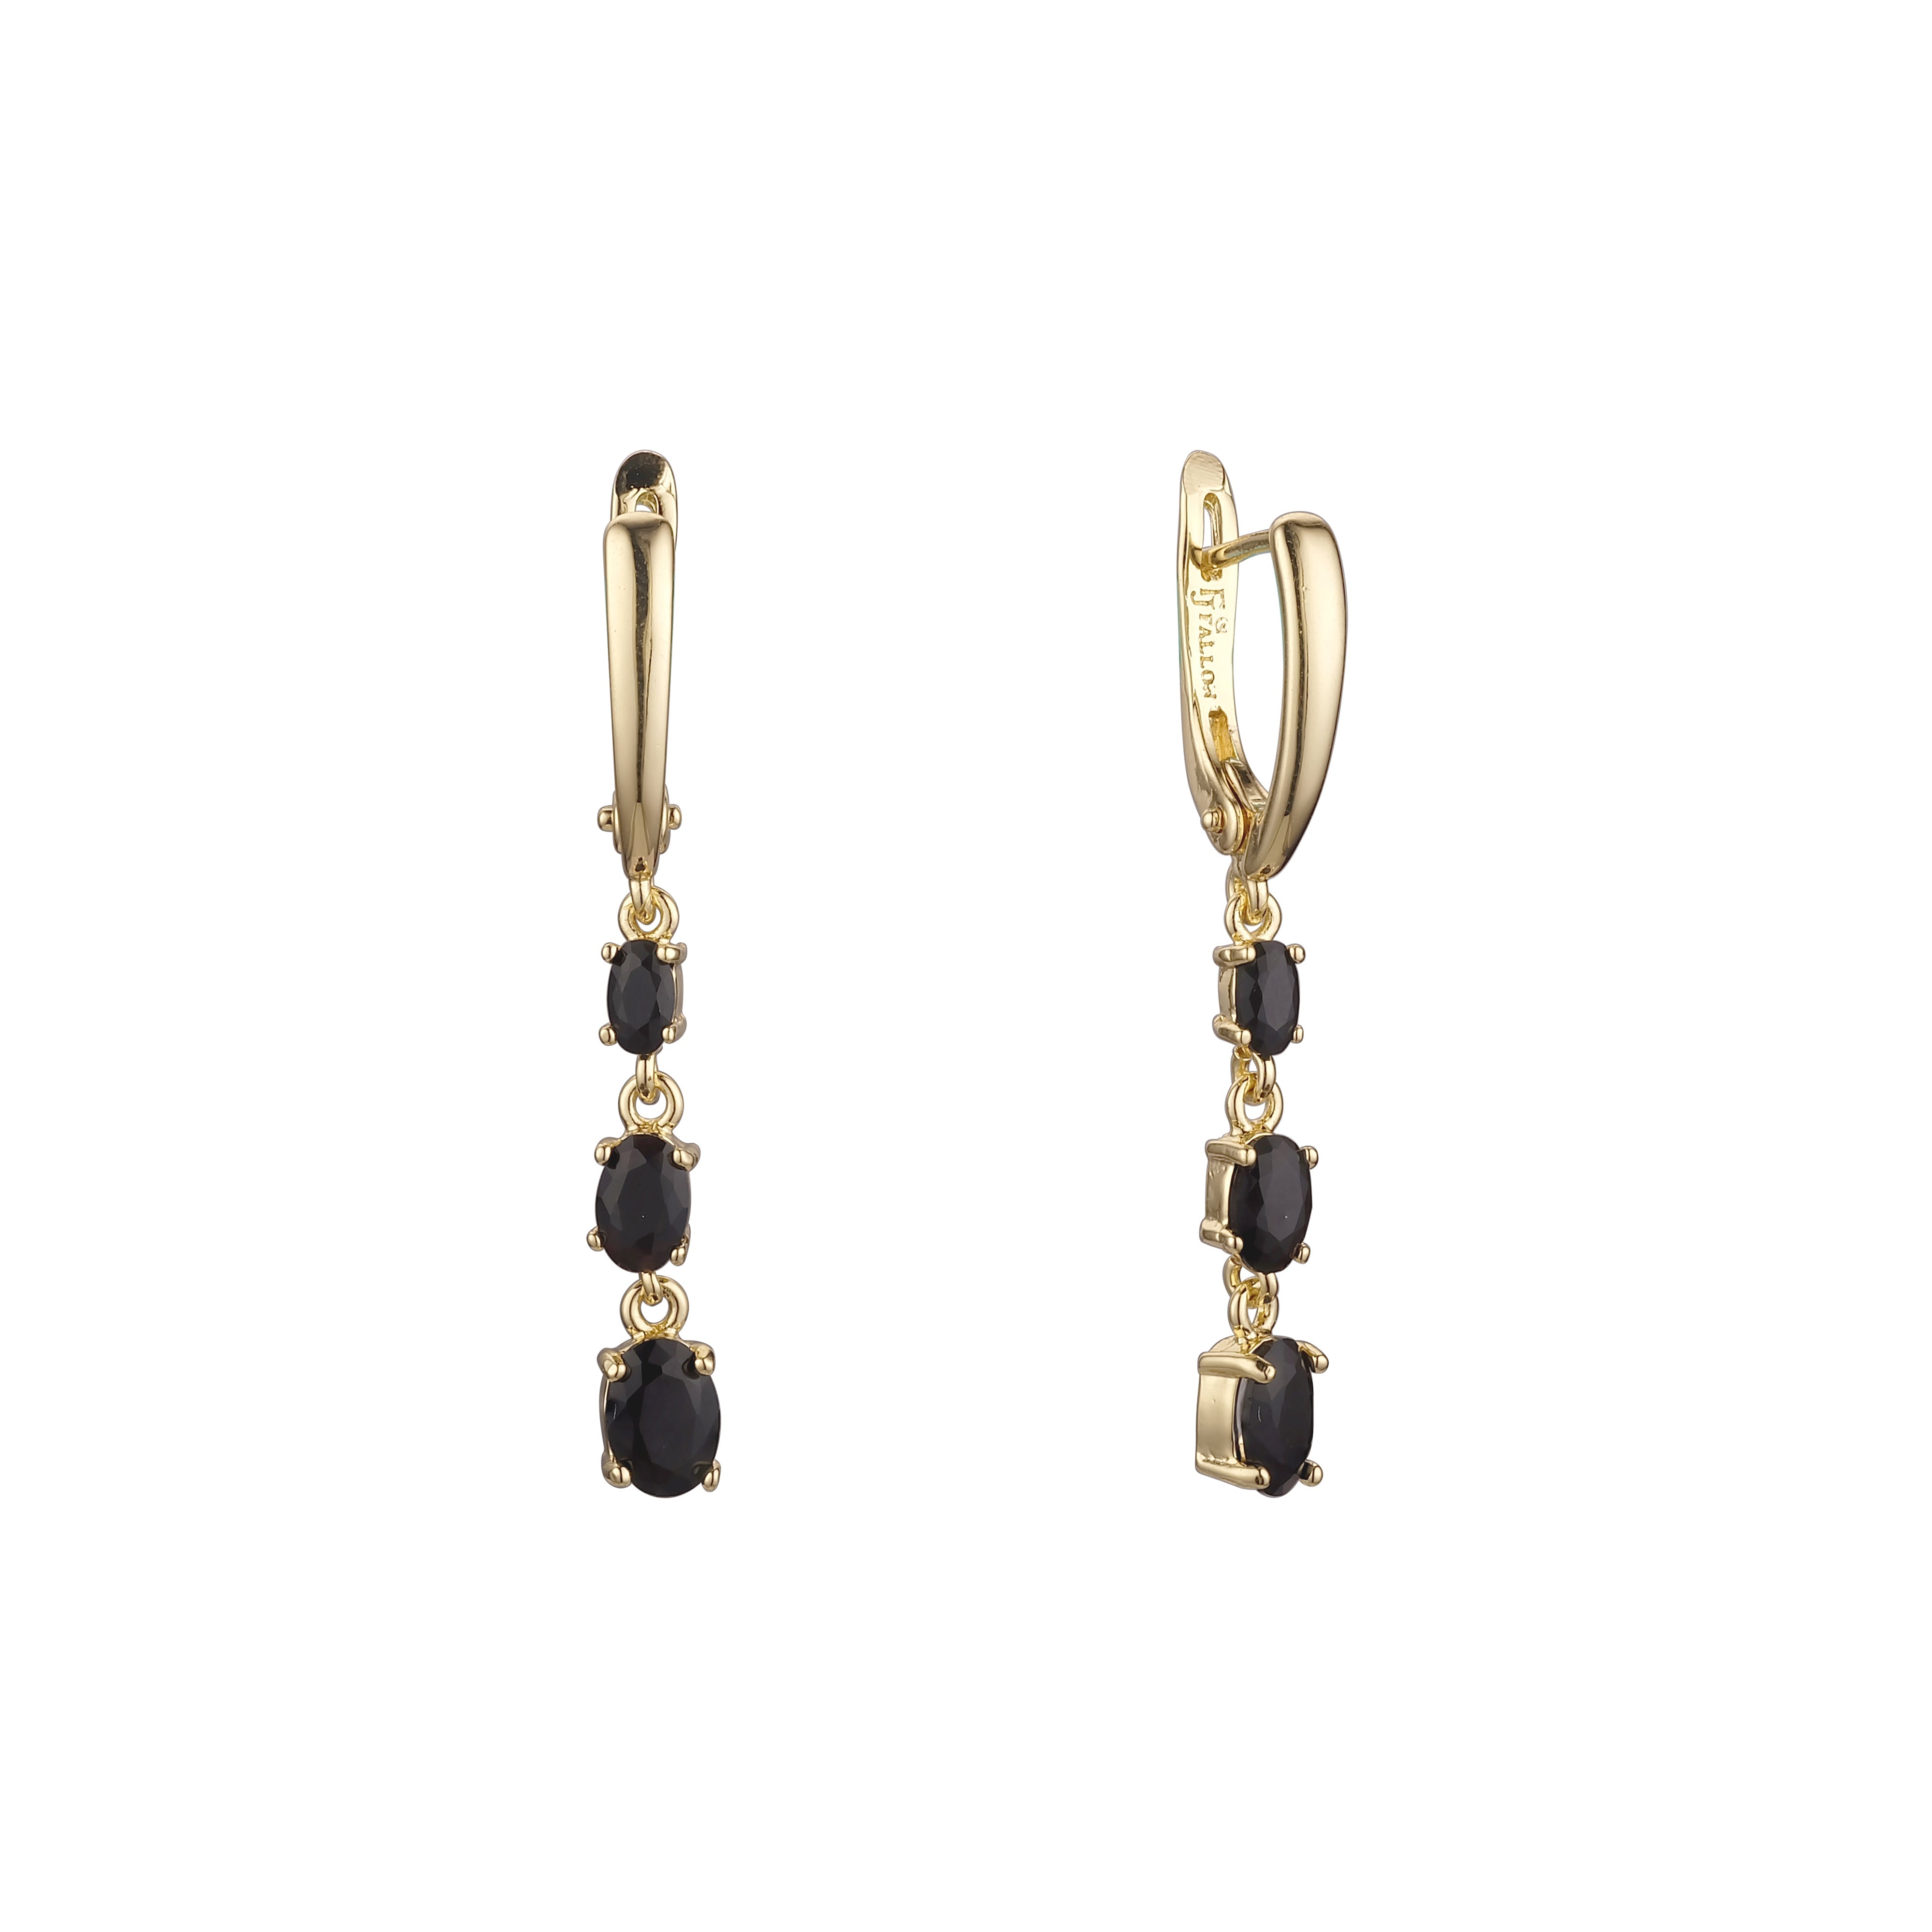 Triple stones cluster drop earrings in 14K Gold, Rose Gold plating colors